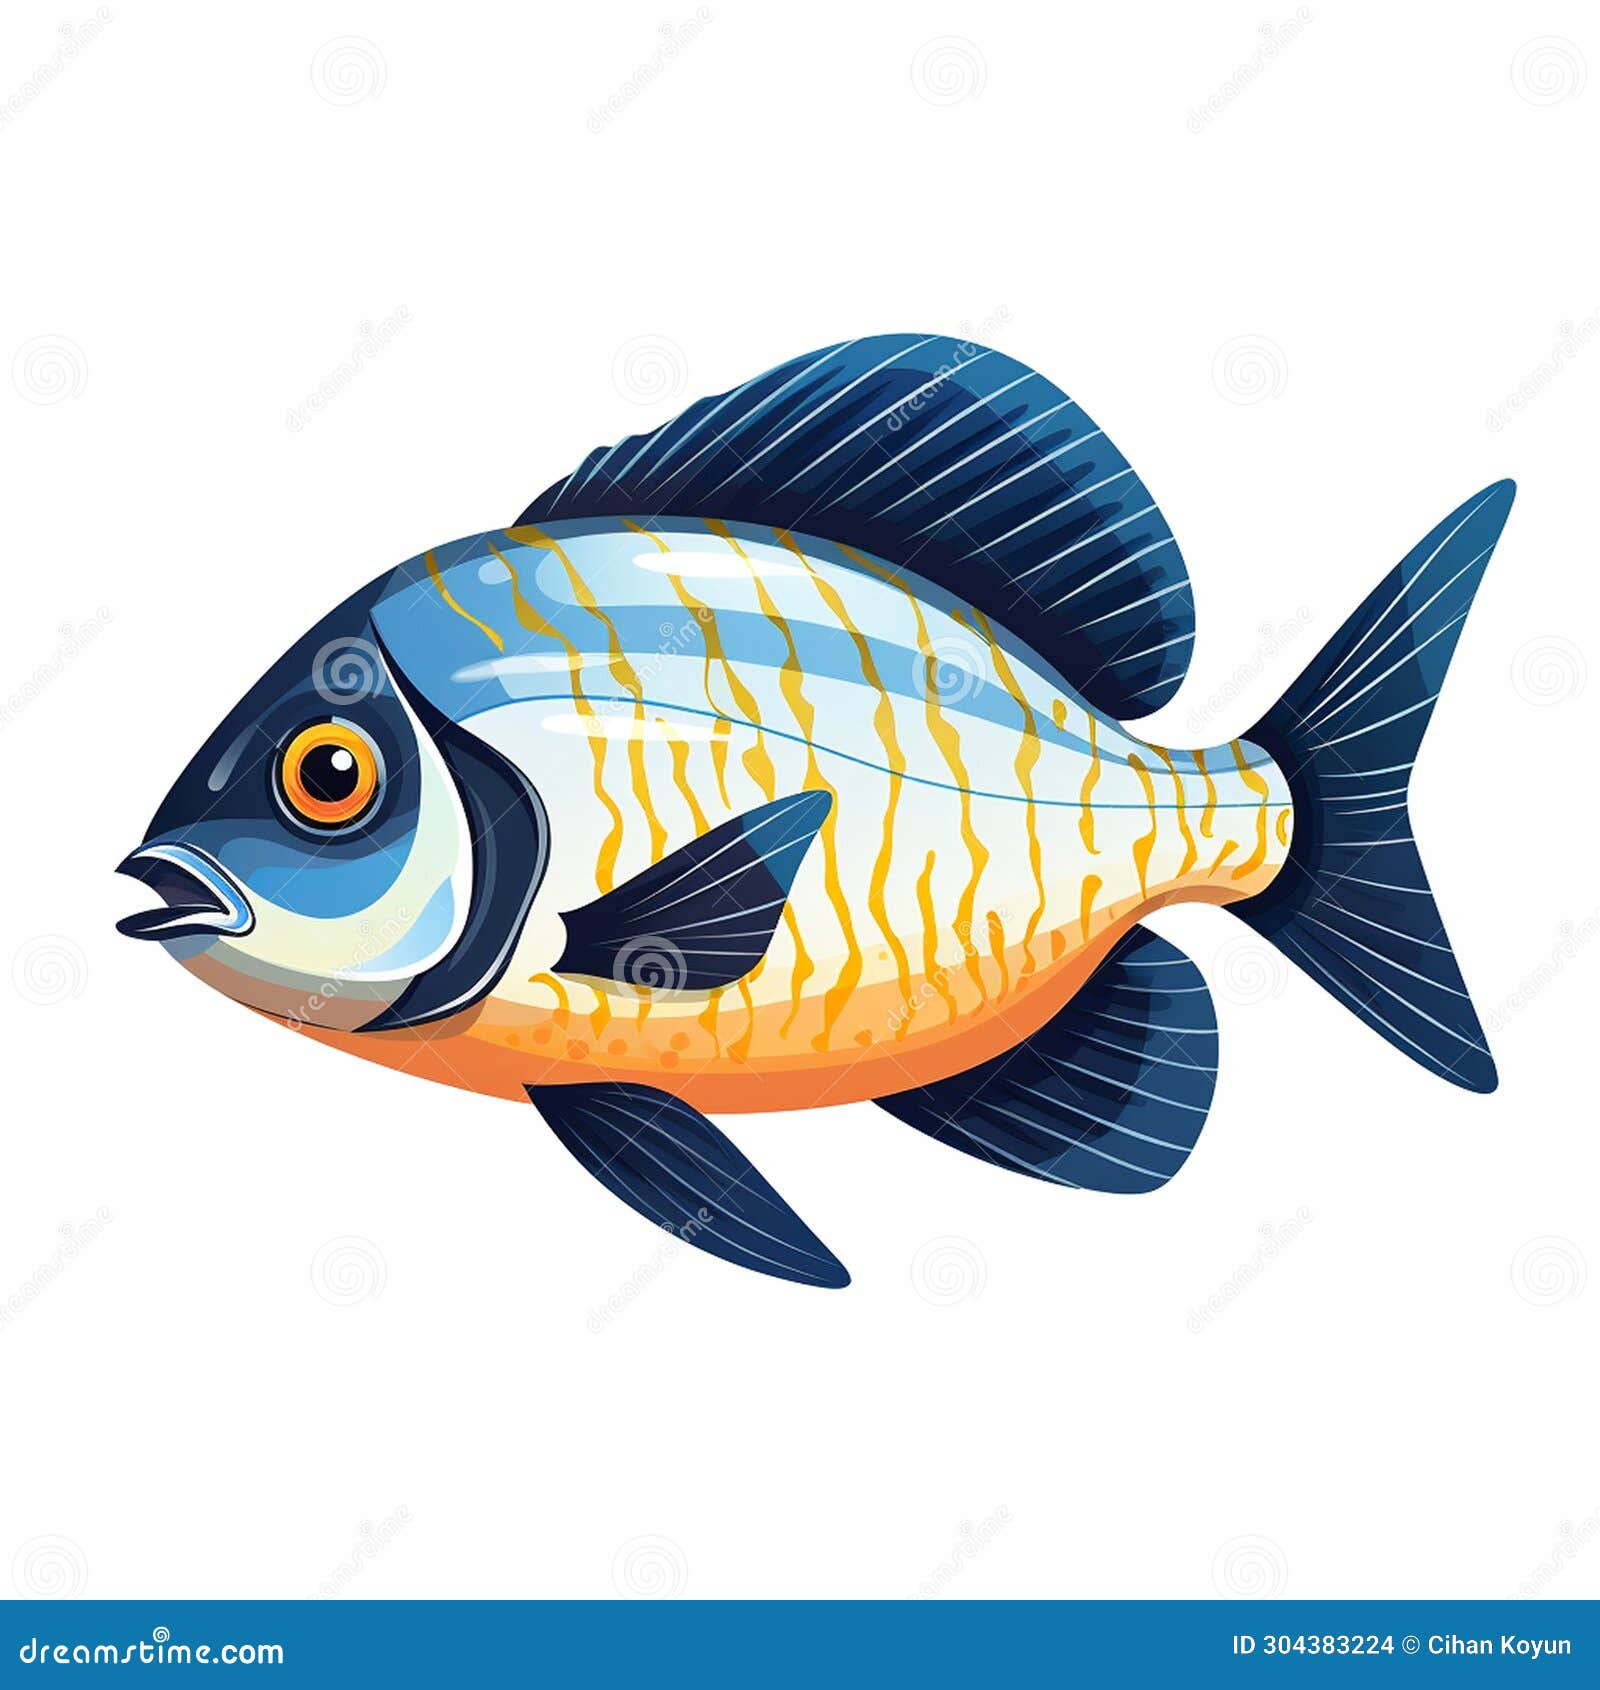 Best Betta Fish Colors Yellow Marlboro Discus Blue Royal Blue Betta Fish  Colorful Tropical Fish Stock Vector - Illustration of orange, cartoon:  304383224